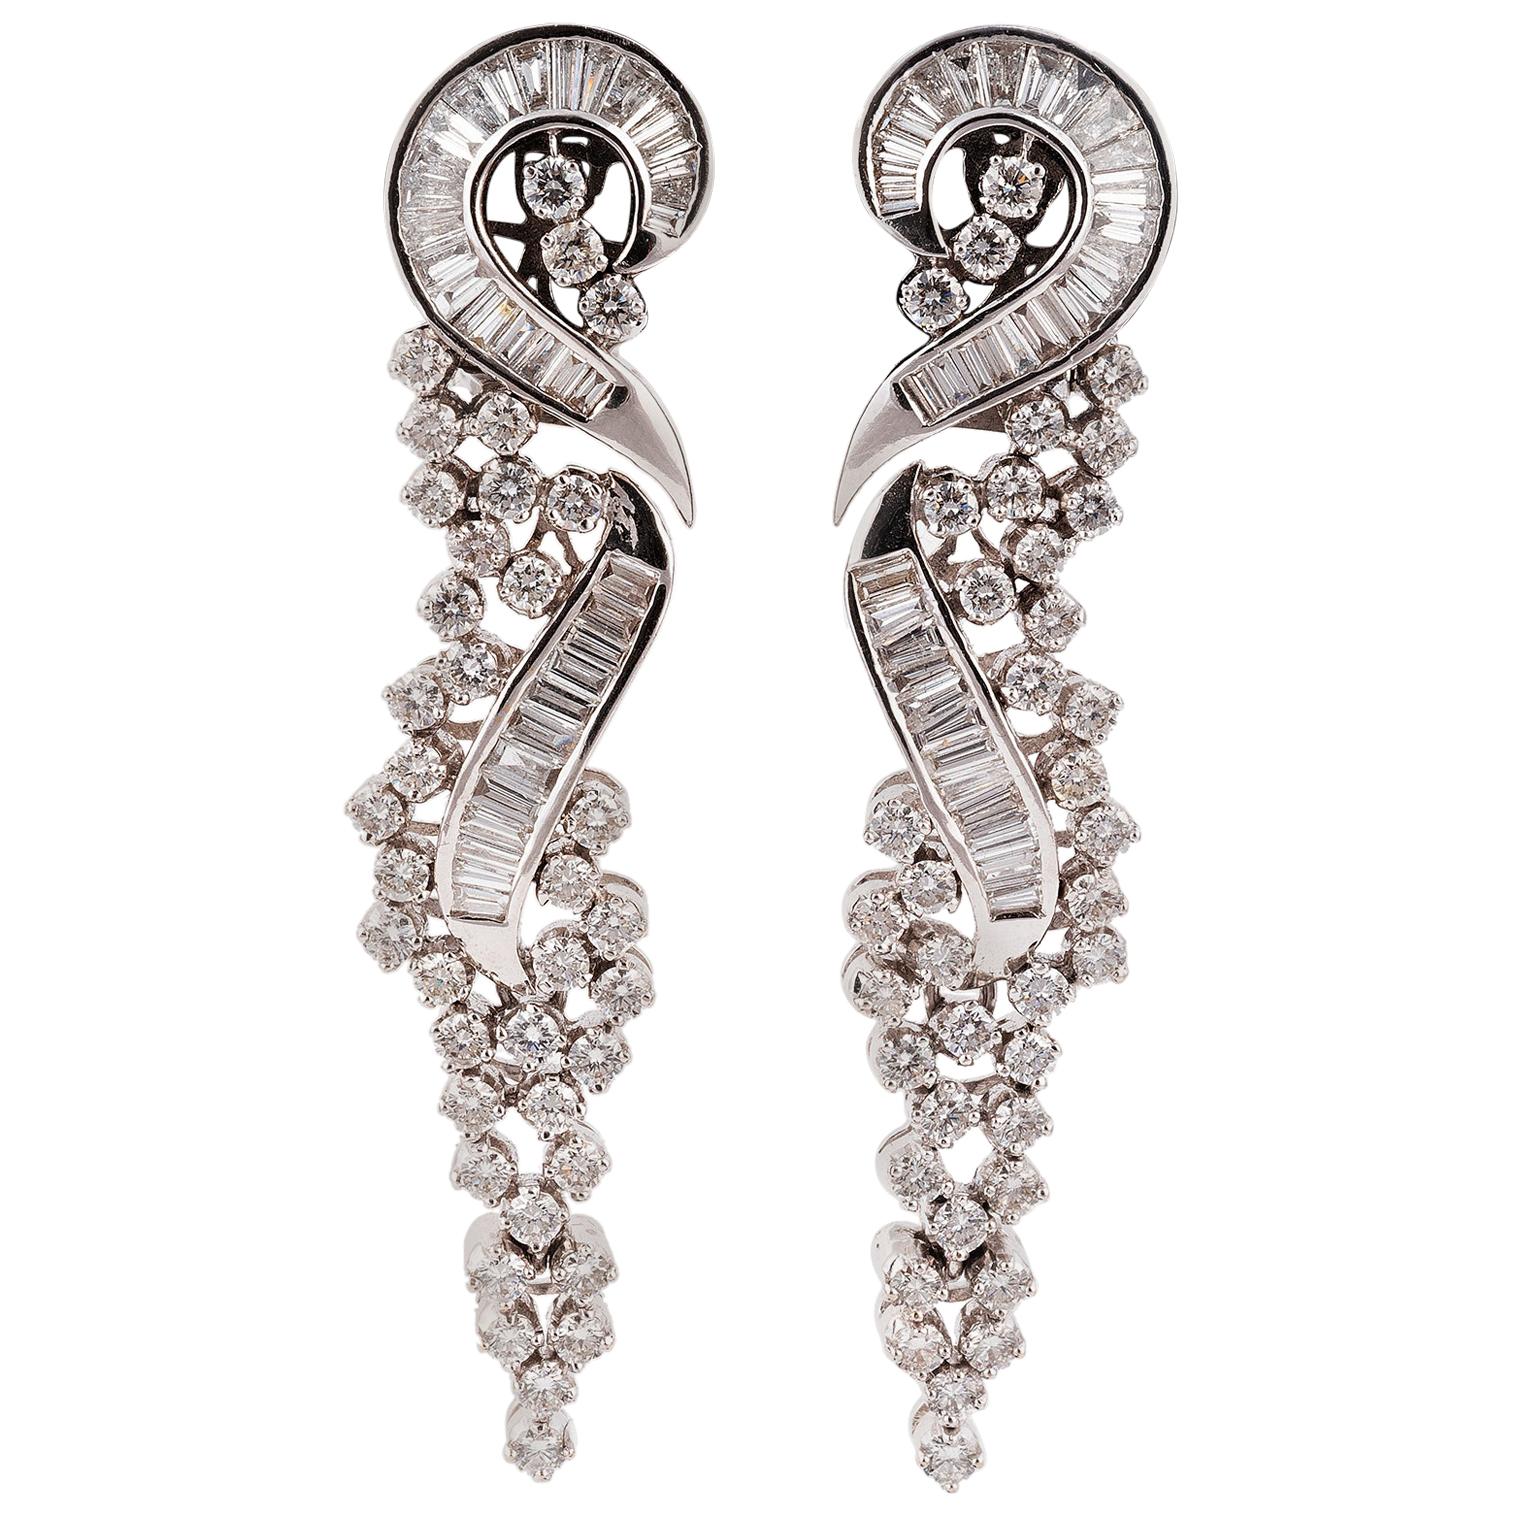 Pair of Diamond and Platinum Pendant Earrings